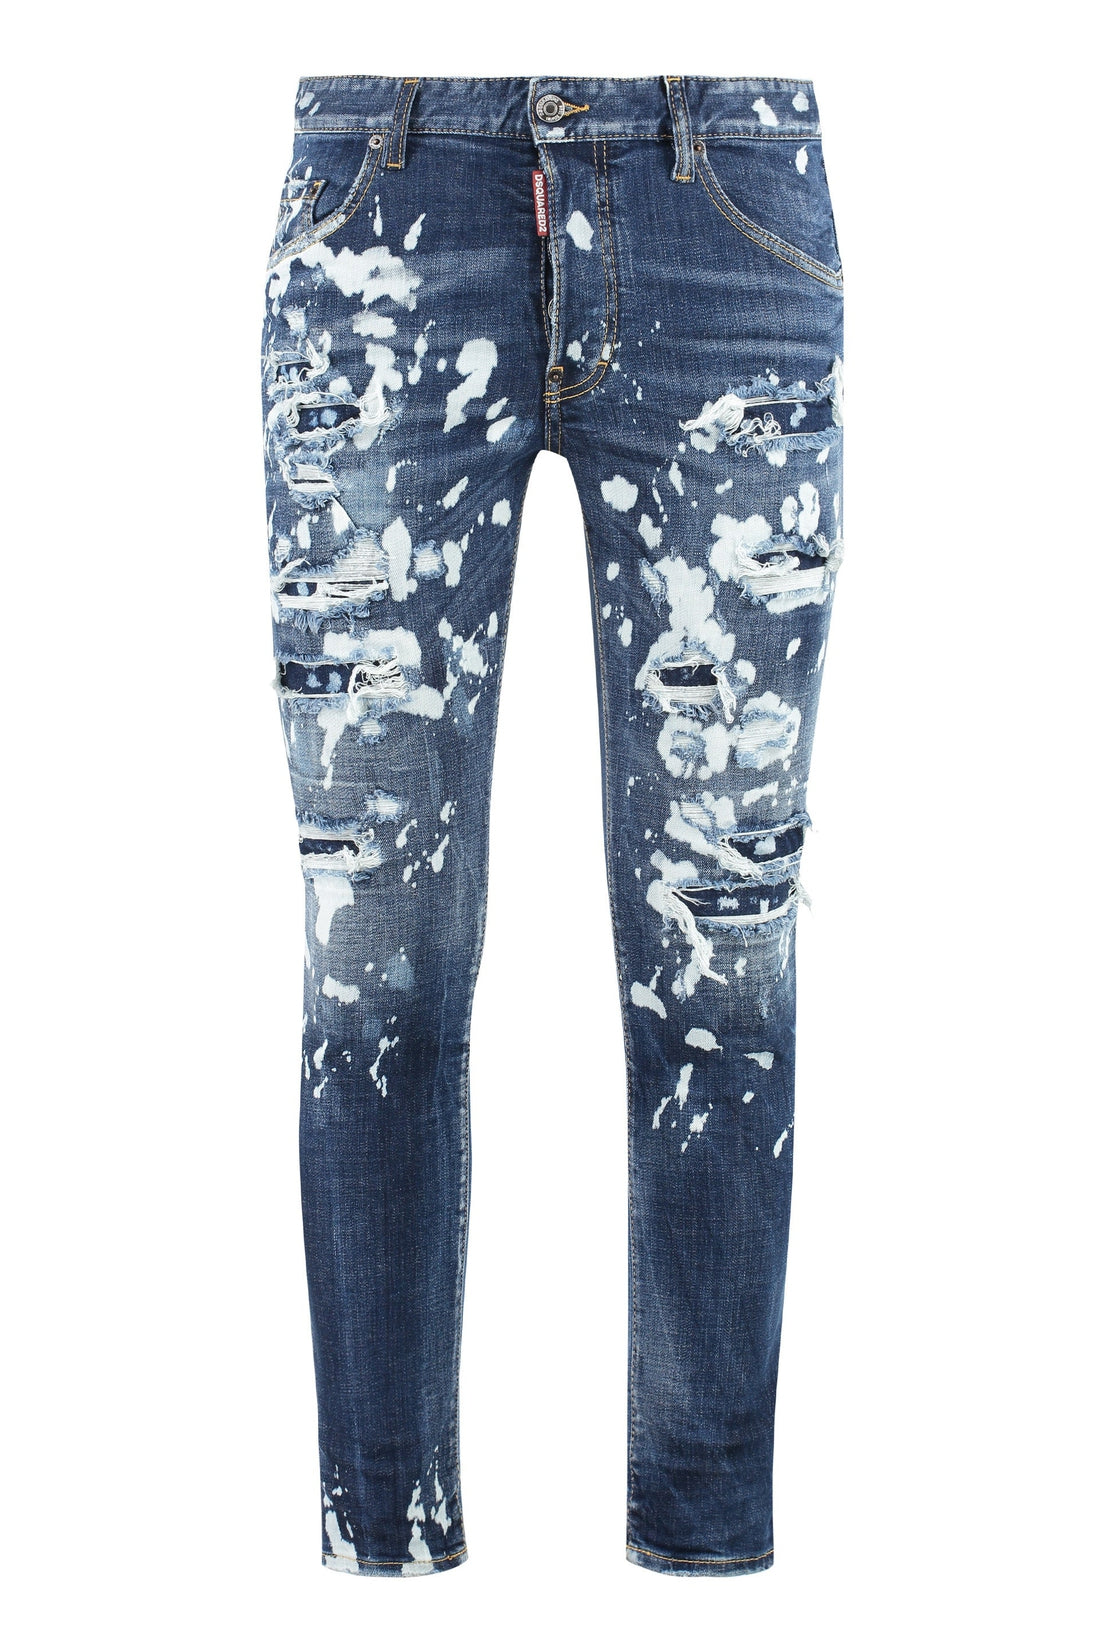 Dsquared2-OUTLET-SALE-Destroyed jeans-ARCHIVIST